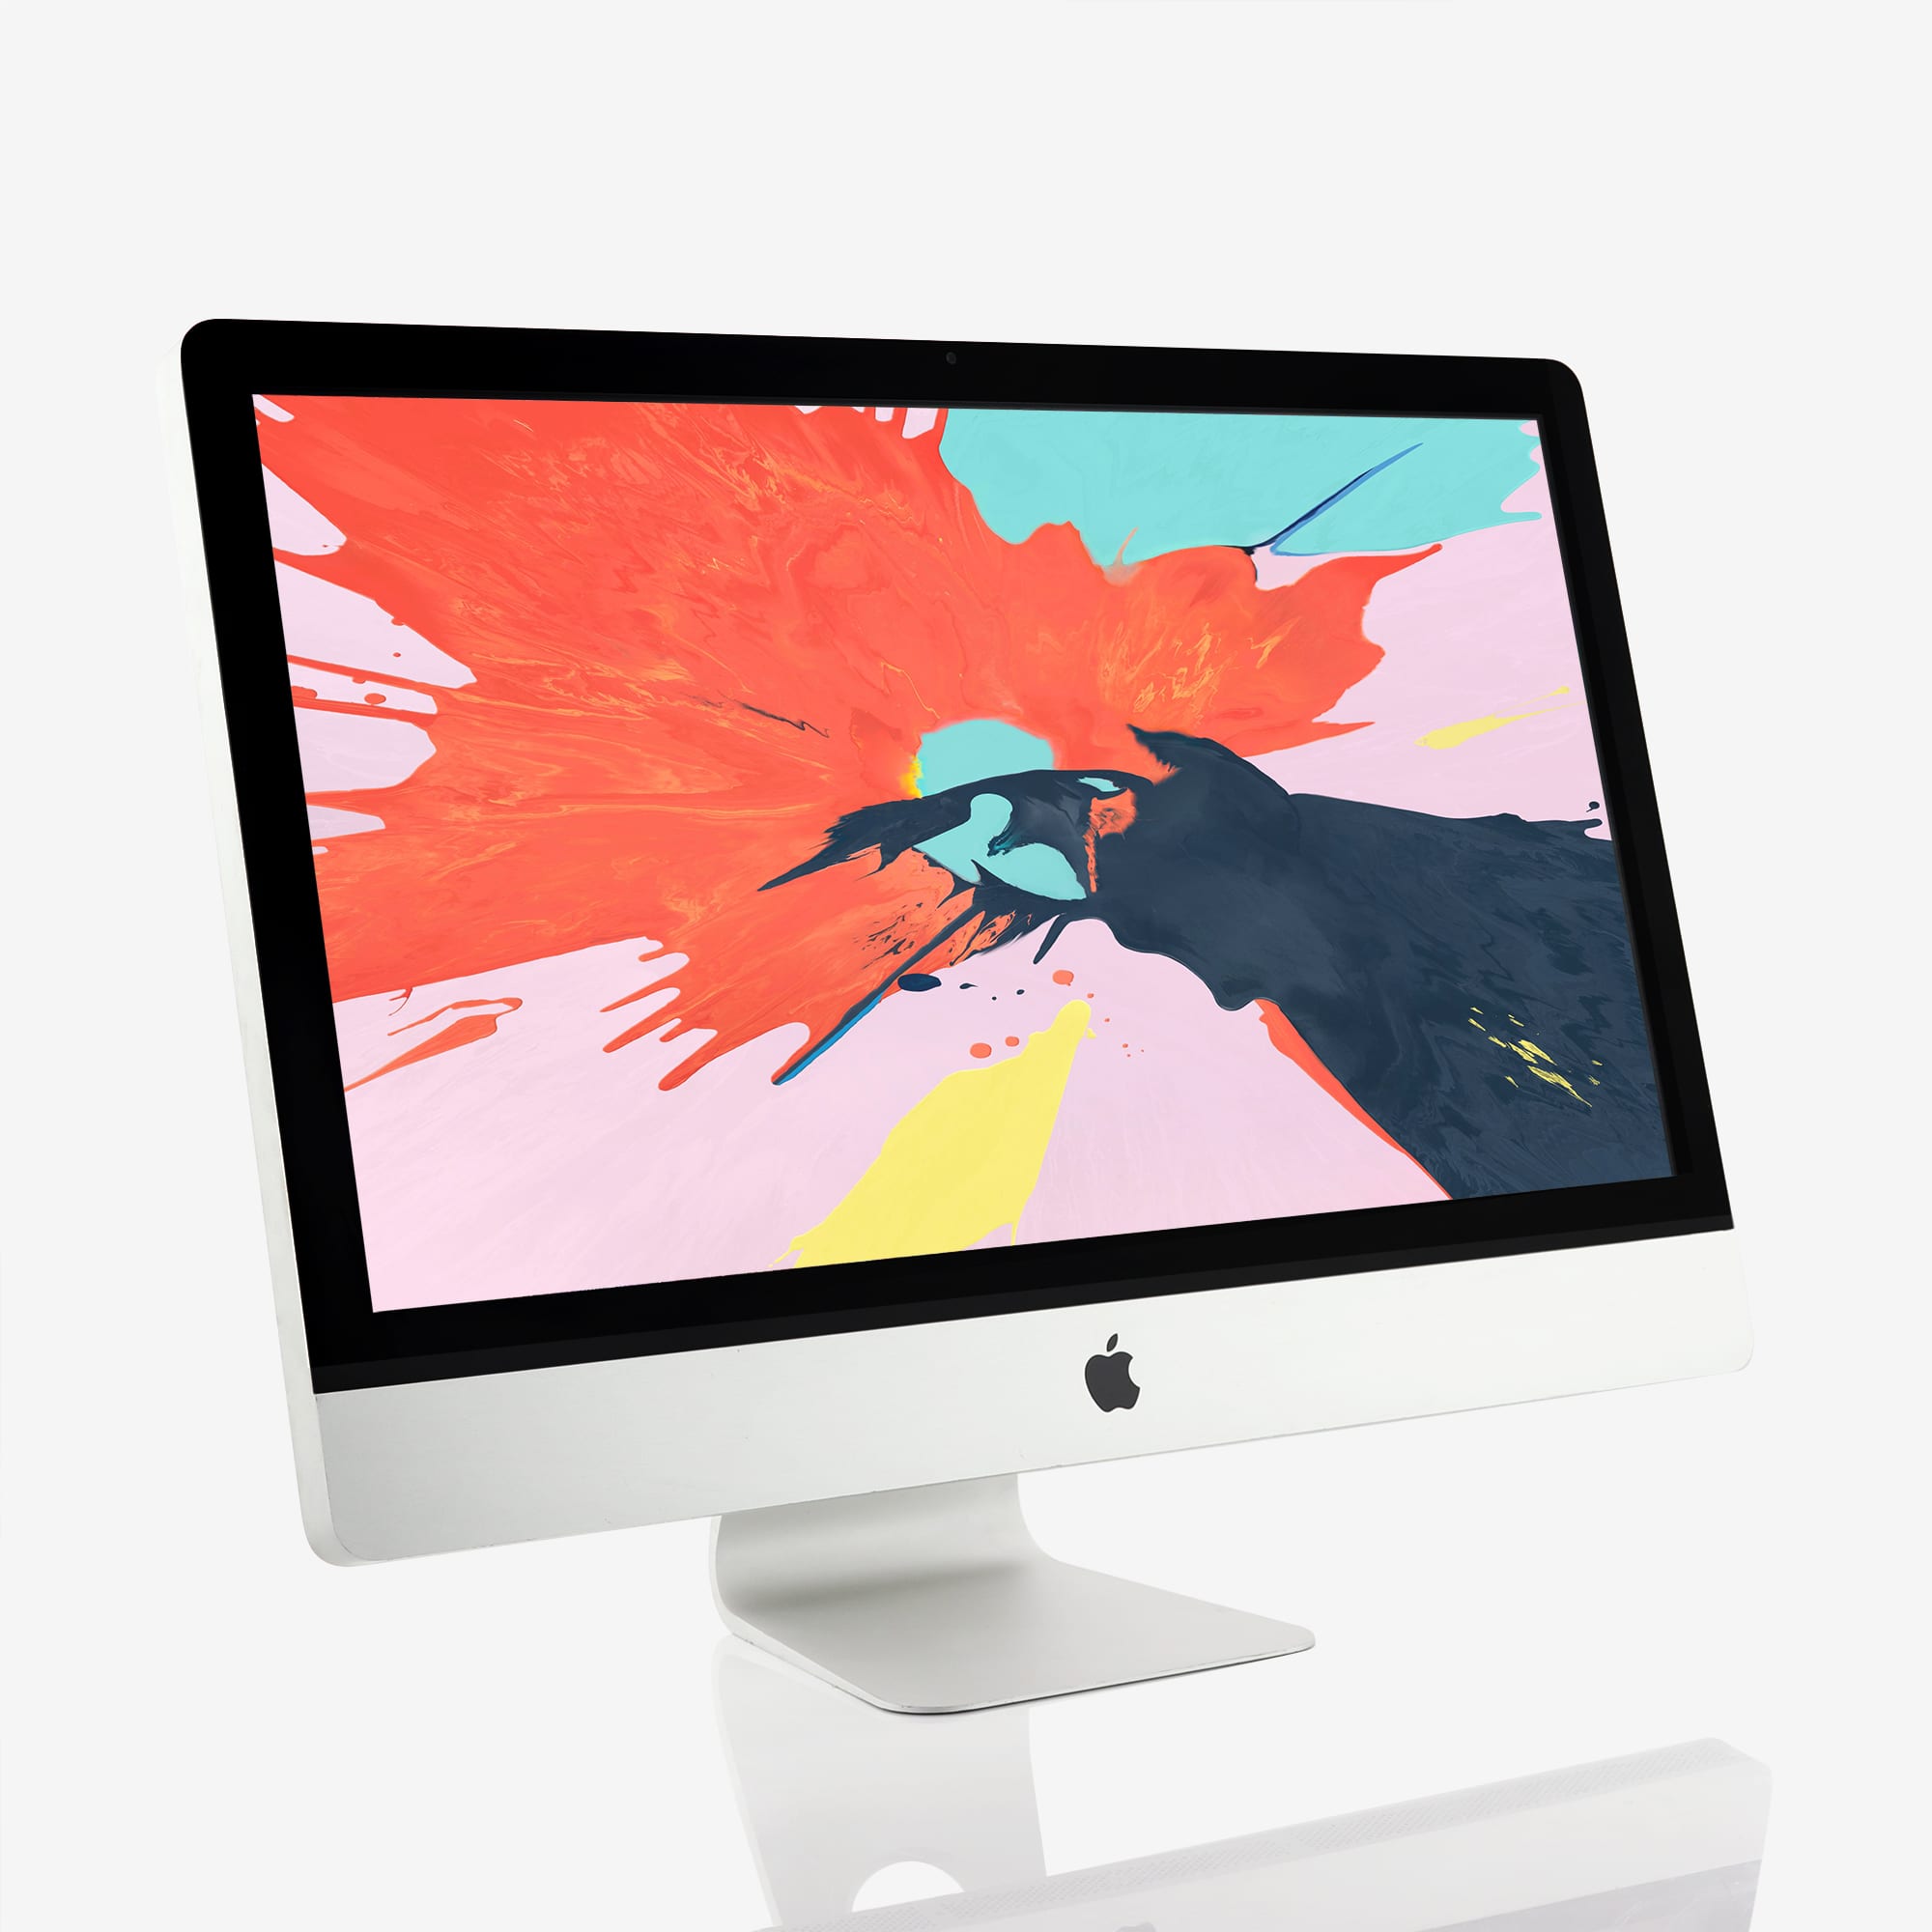 1 x Apple iMac 27 Inch Quad Core i7 2.93 GHz (2010)